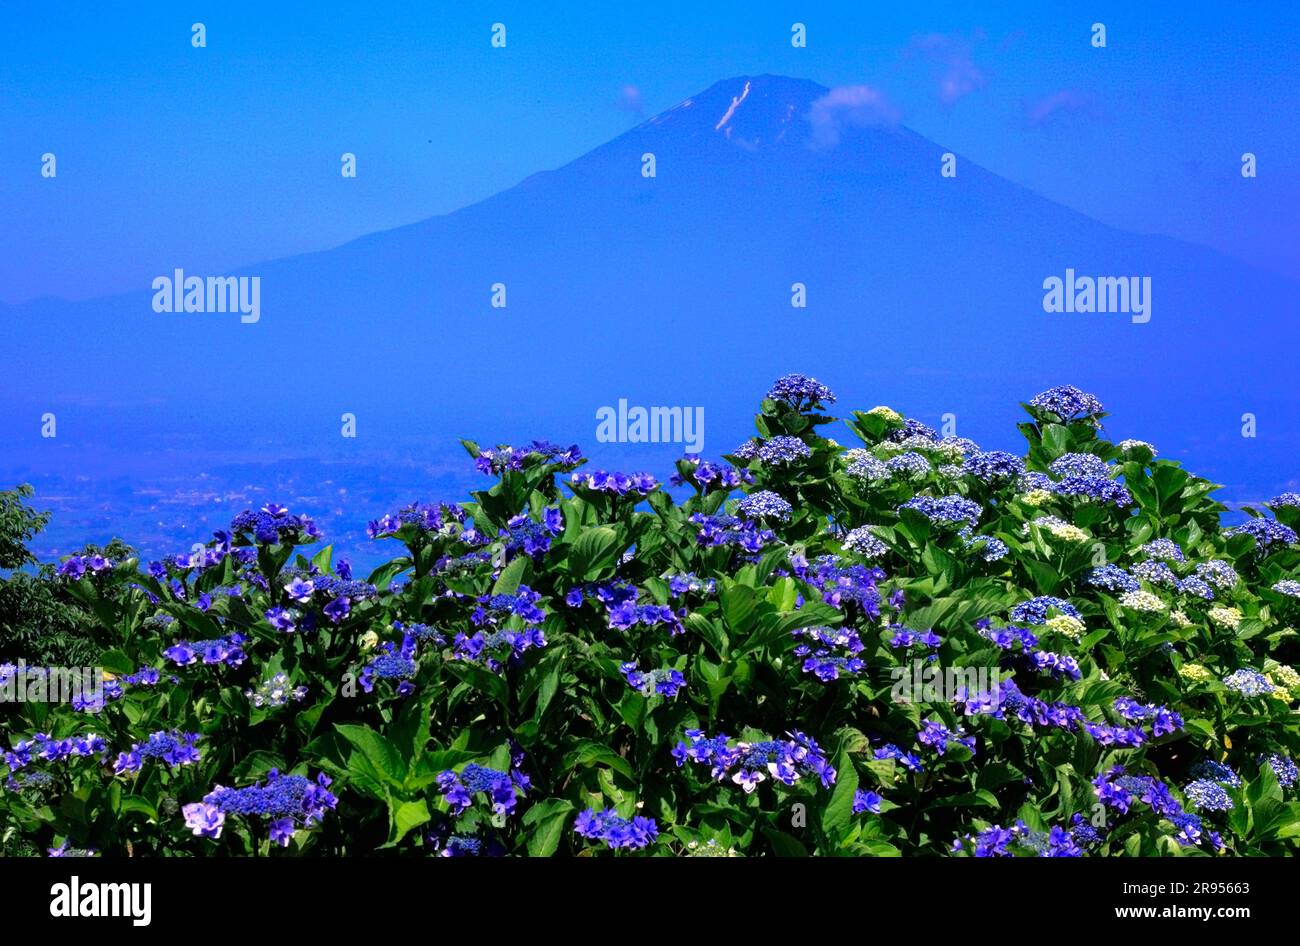 Mount Fuji and Hydrangea bloom Stock Photo